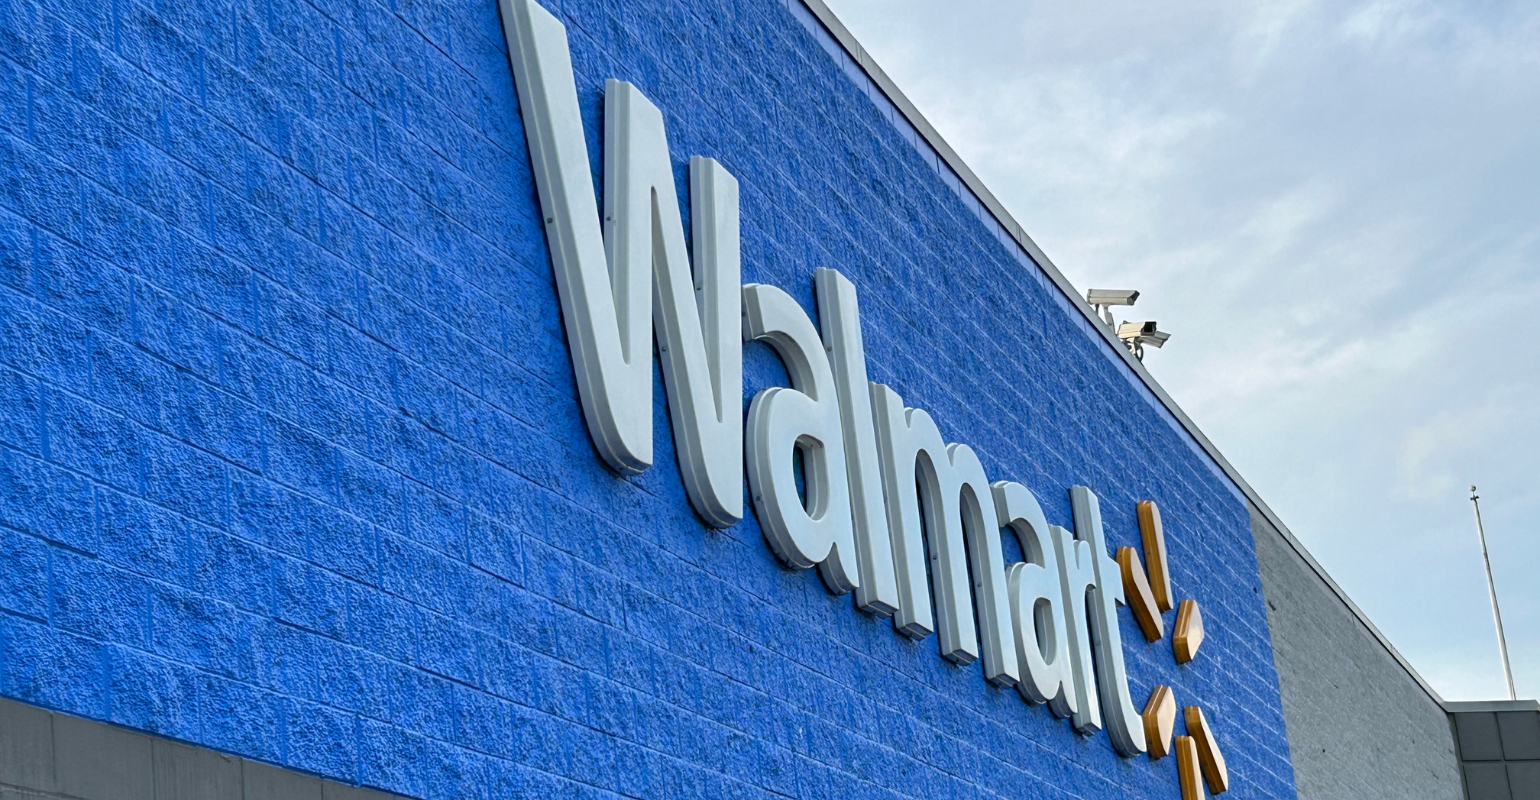 Walmart involved in dog food recall